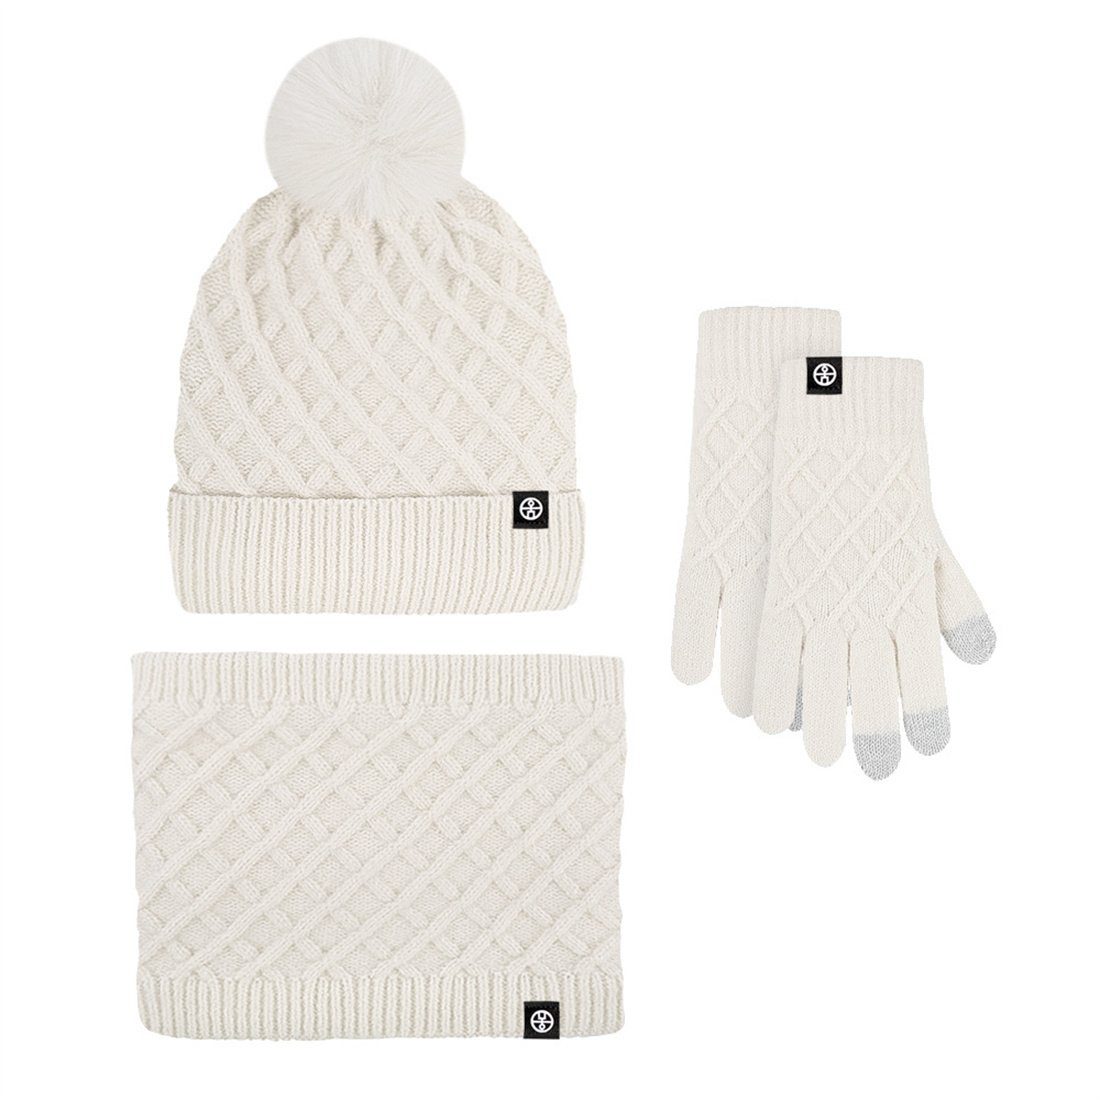 DÖRÖY Strickmütze Winter gepolstert Warm Mütze Schal Handschuhe 3 Stück, Warm Set Weiß